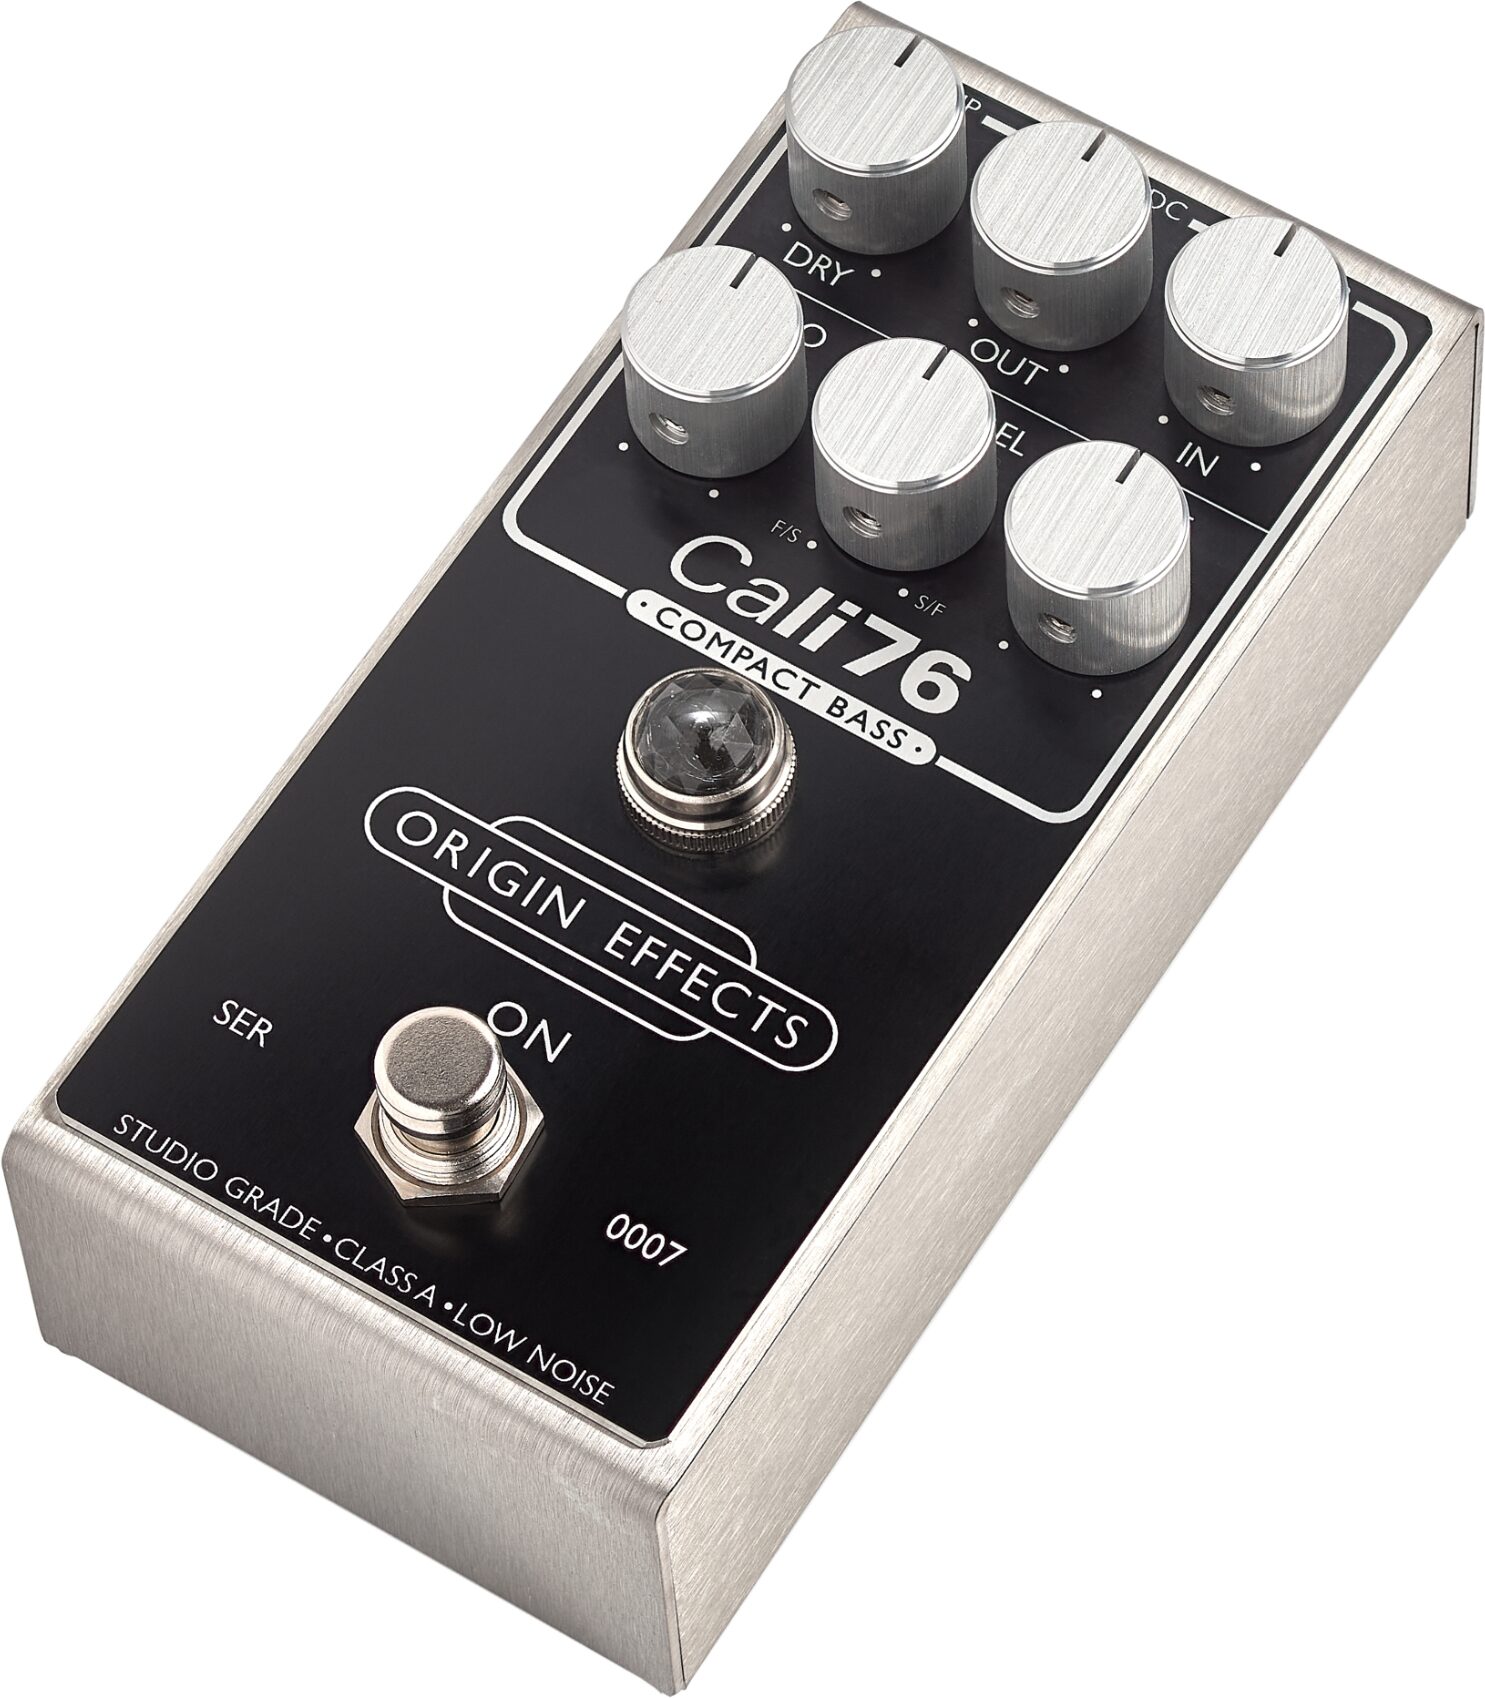 Origin Effects Cali76 Compact Bass Compressor Pedal | zZounds